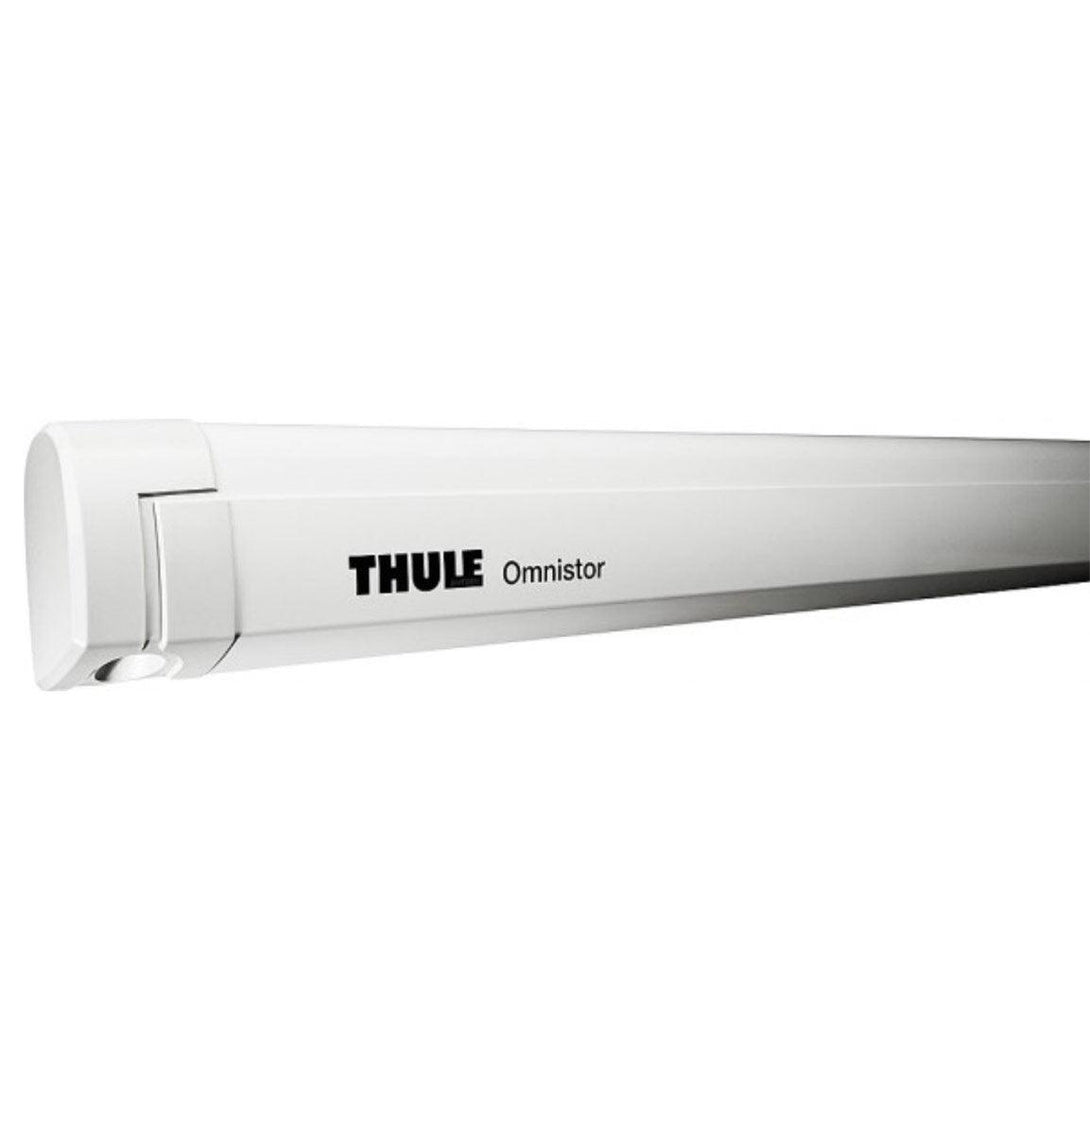 Thule Omnistor 5200 Motorhome Awning - White/Mystic Grey - Towsure